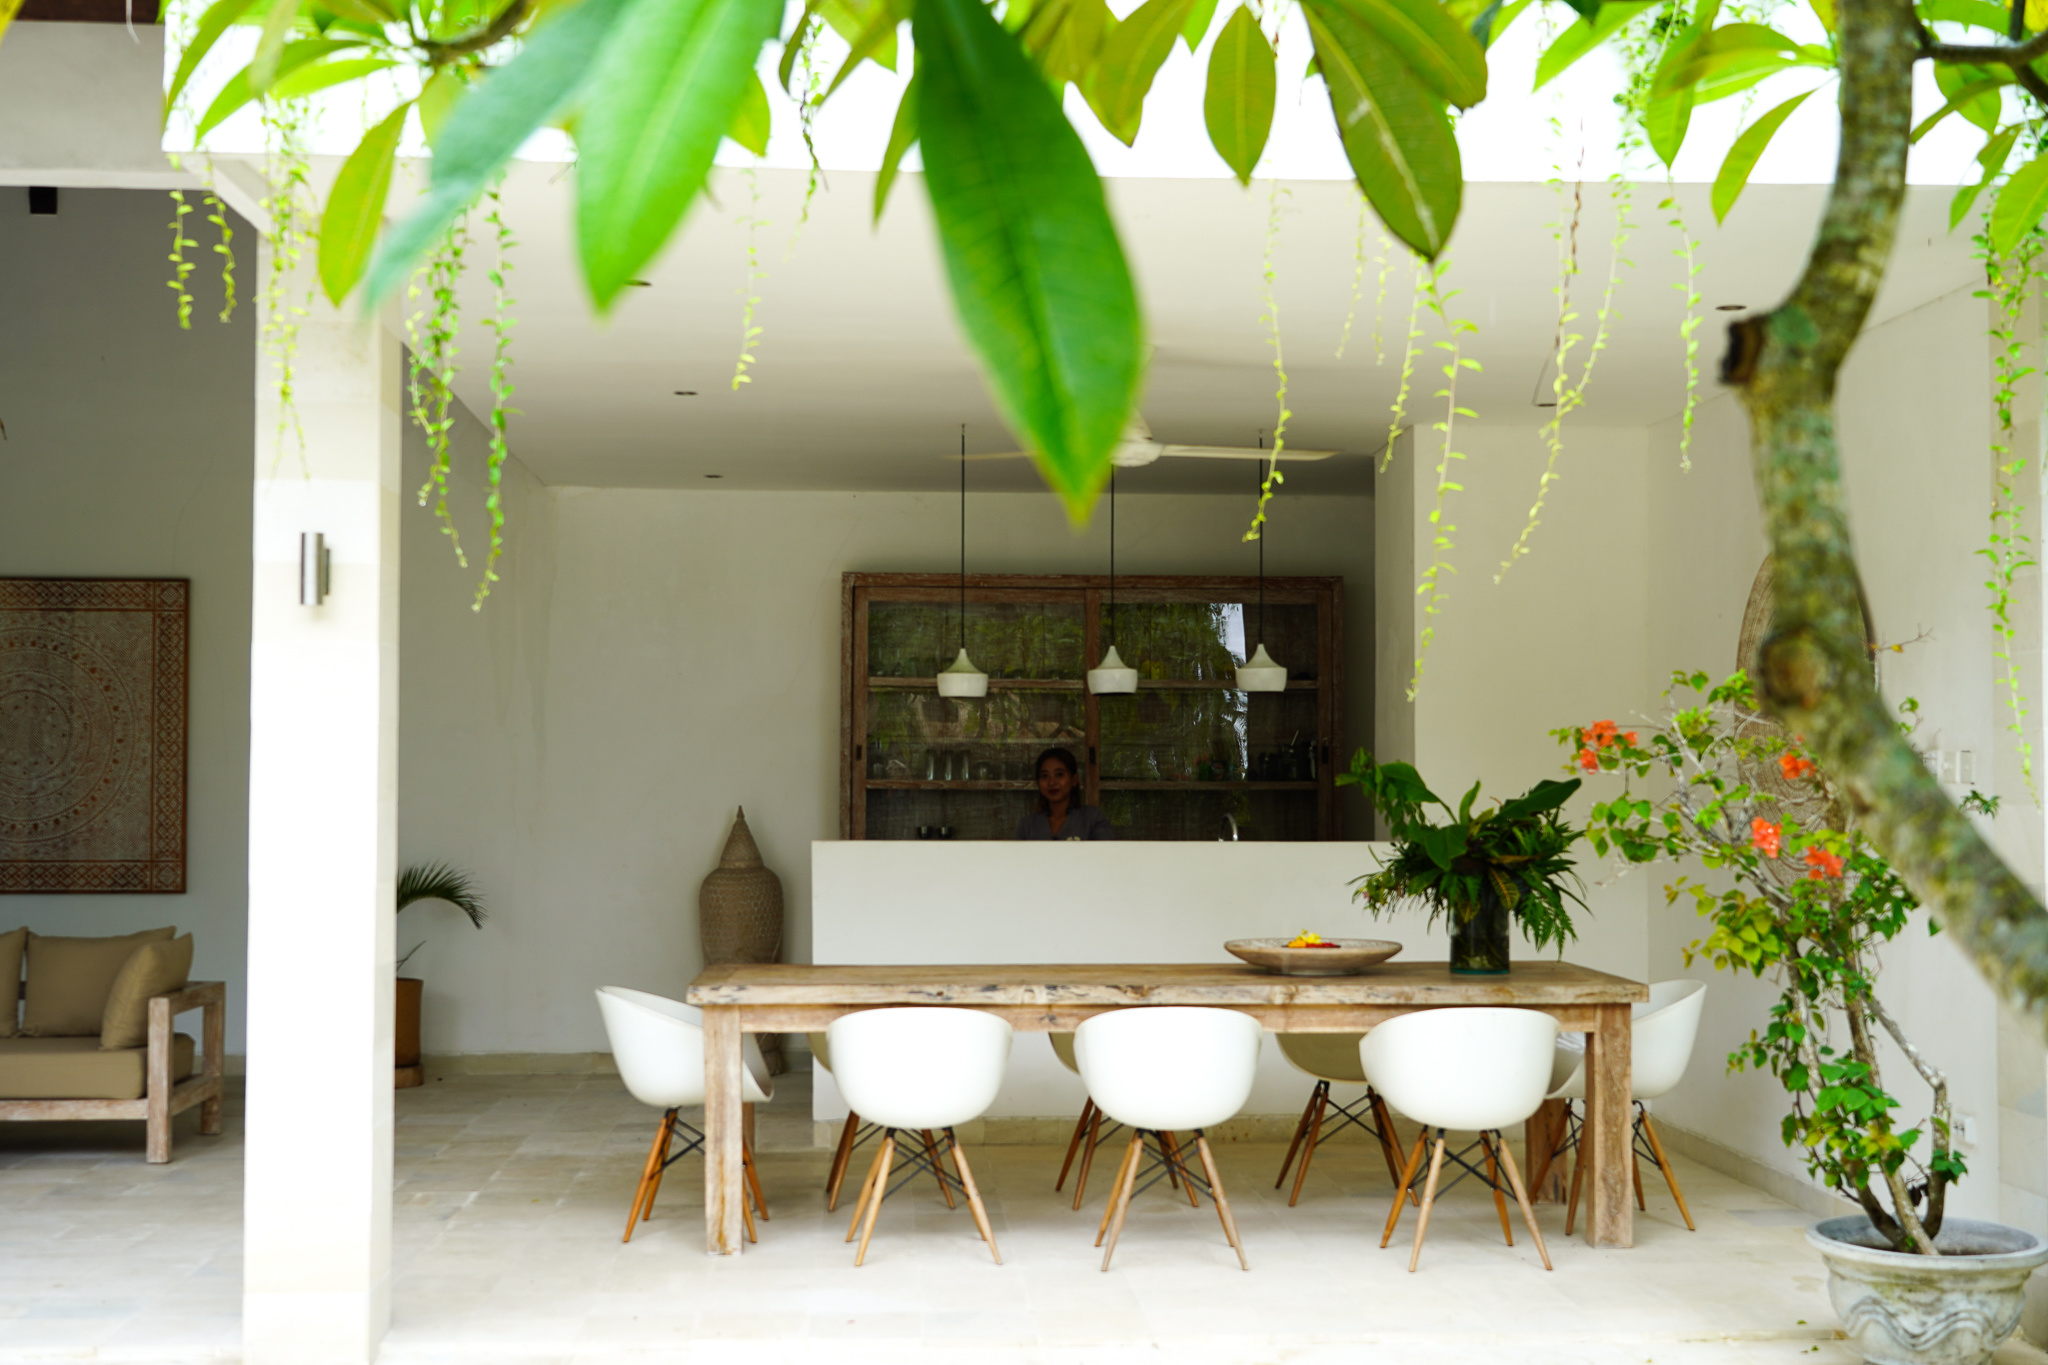 Interieurontwerp & styling holiday villa "Hidden Jewel" Bali - Simply Interior | Interieur Advies, Styling Ontwerp Studio en Interieur | Haarlem